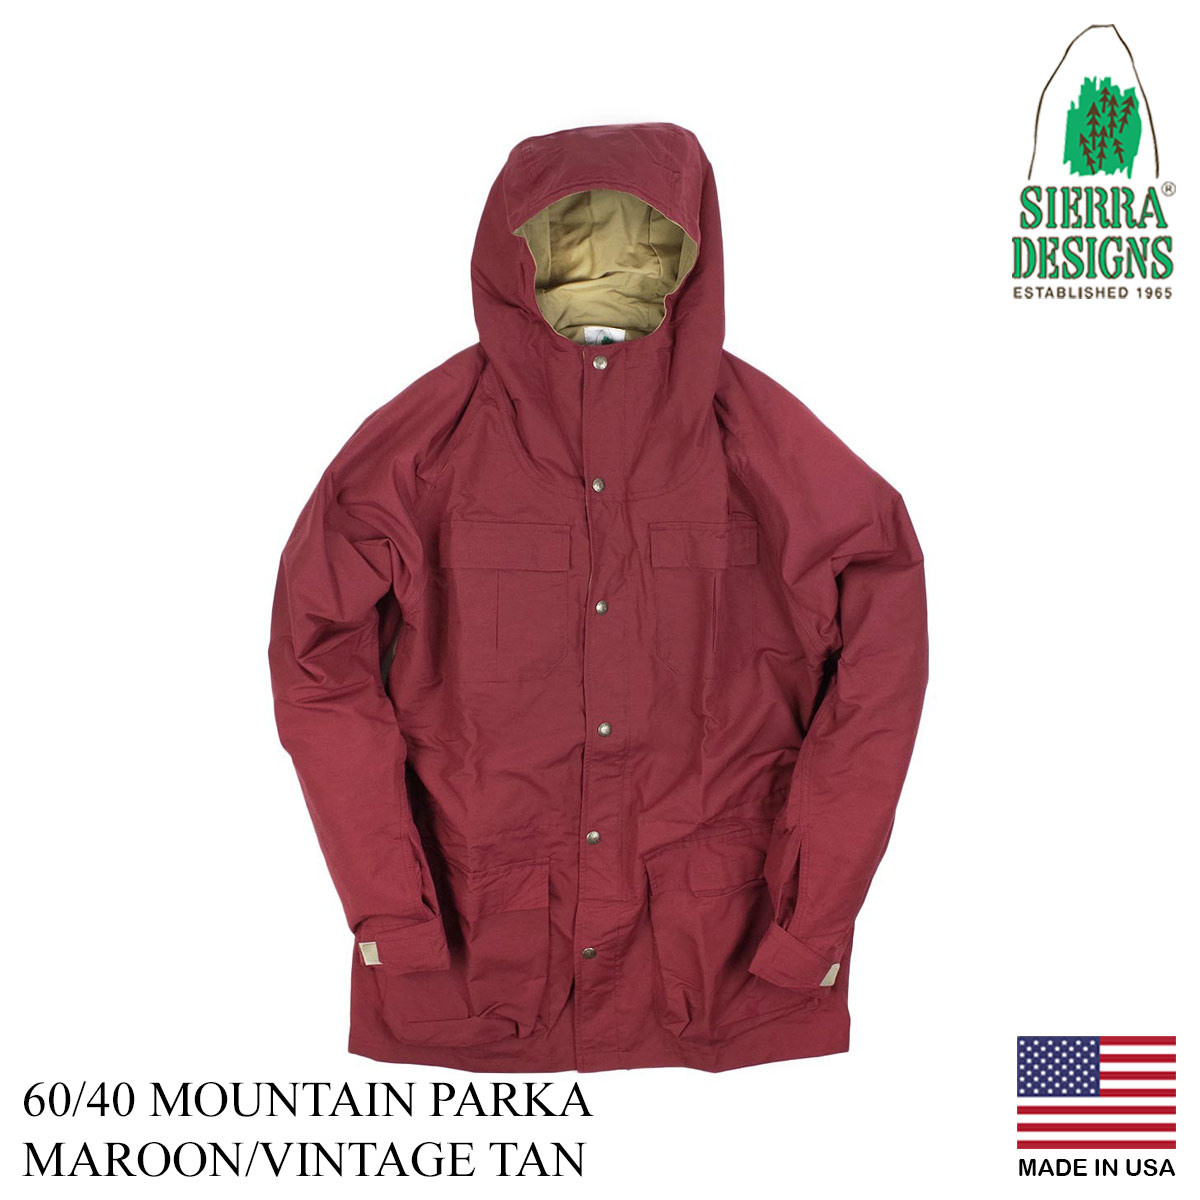 Sierra Designs 60/40 Mountain Parka review